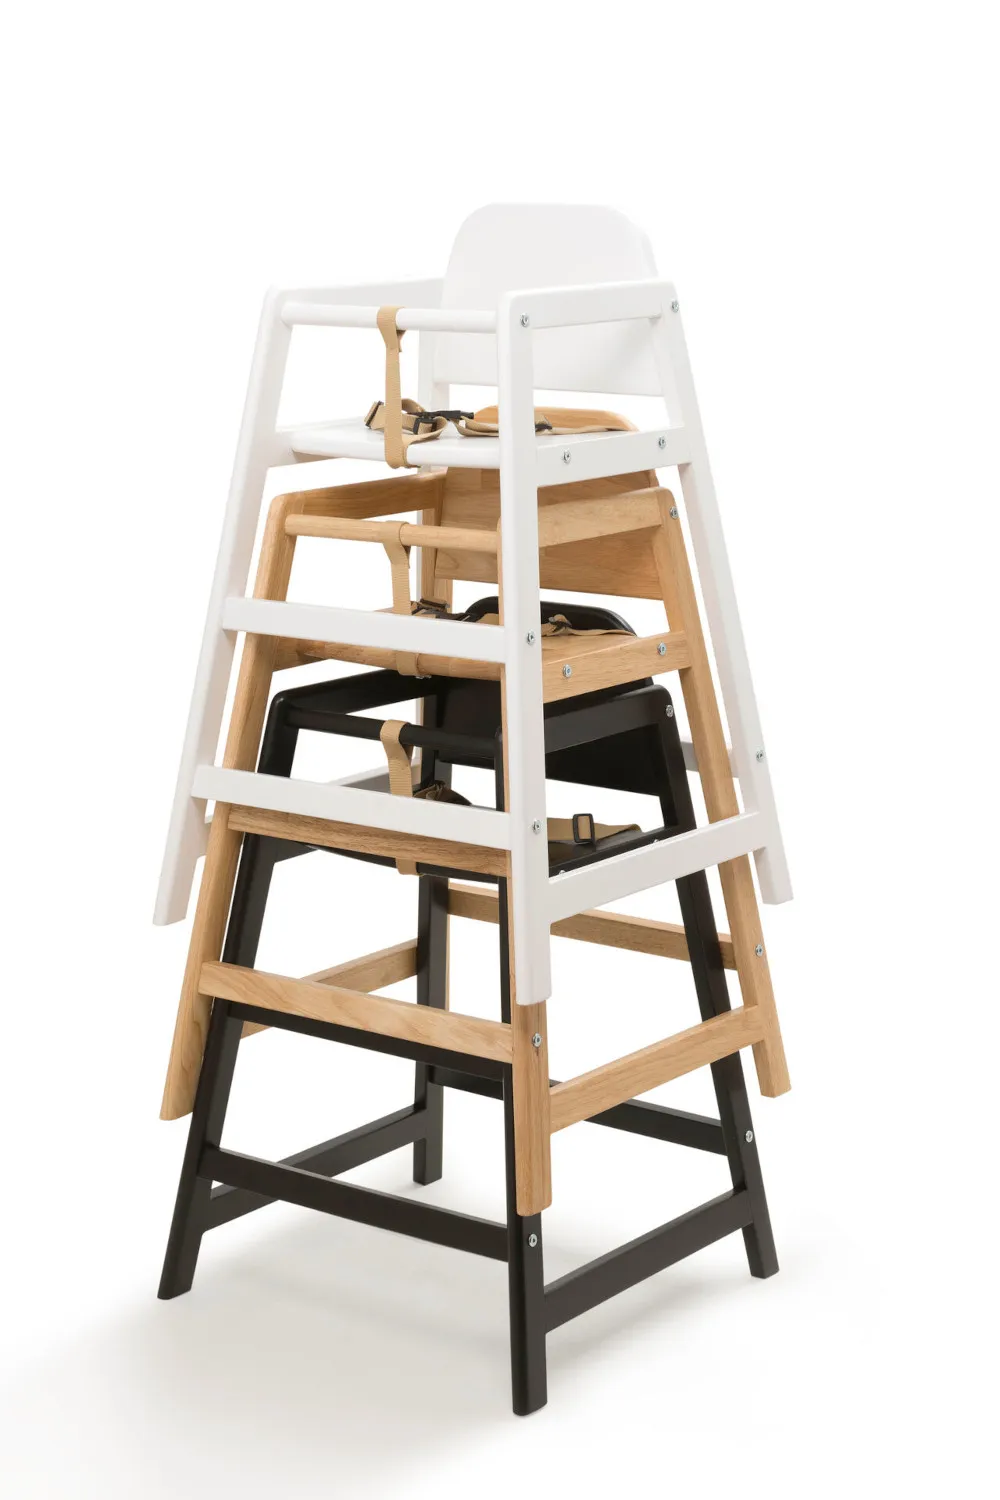 Emma - Stackable wooden high chair